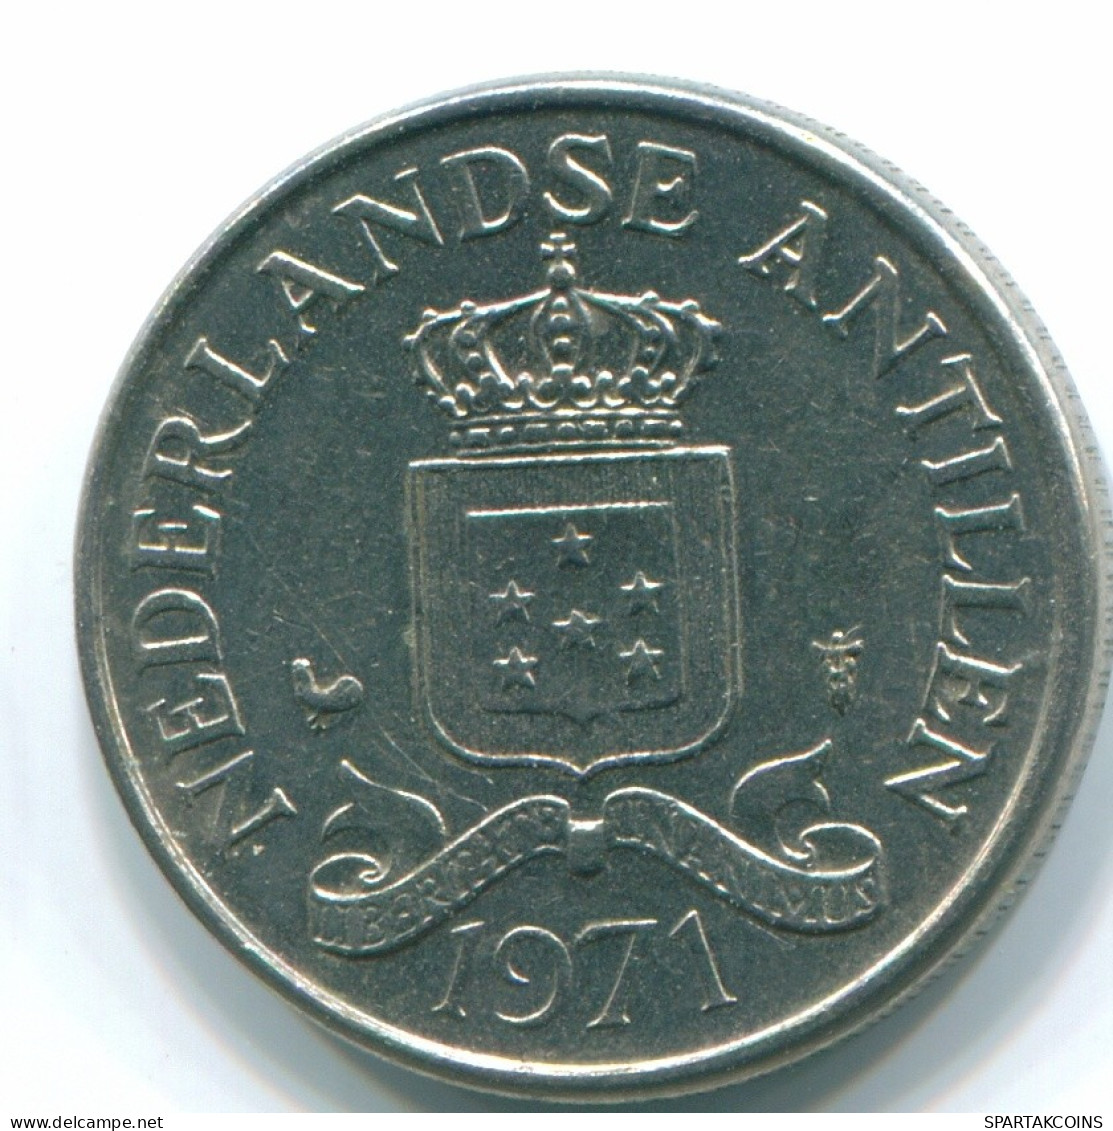 25 CENTS 1971 NIEDERLÄNDISCHE ANTILLEN Nickel Koloniale Münze #S11504.D.A - Nederlandse Antillen